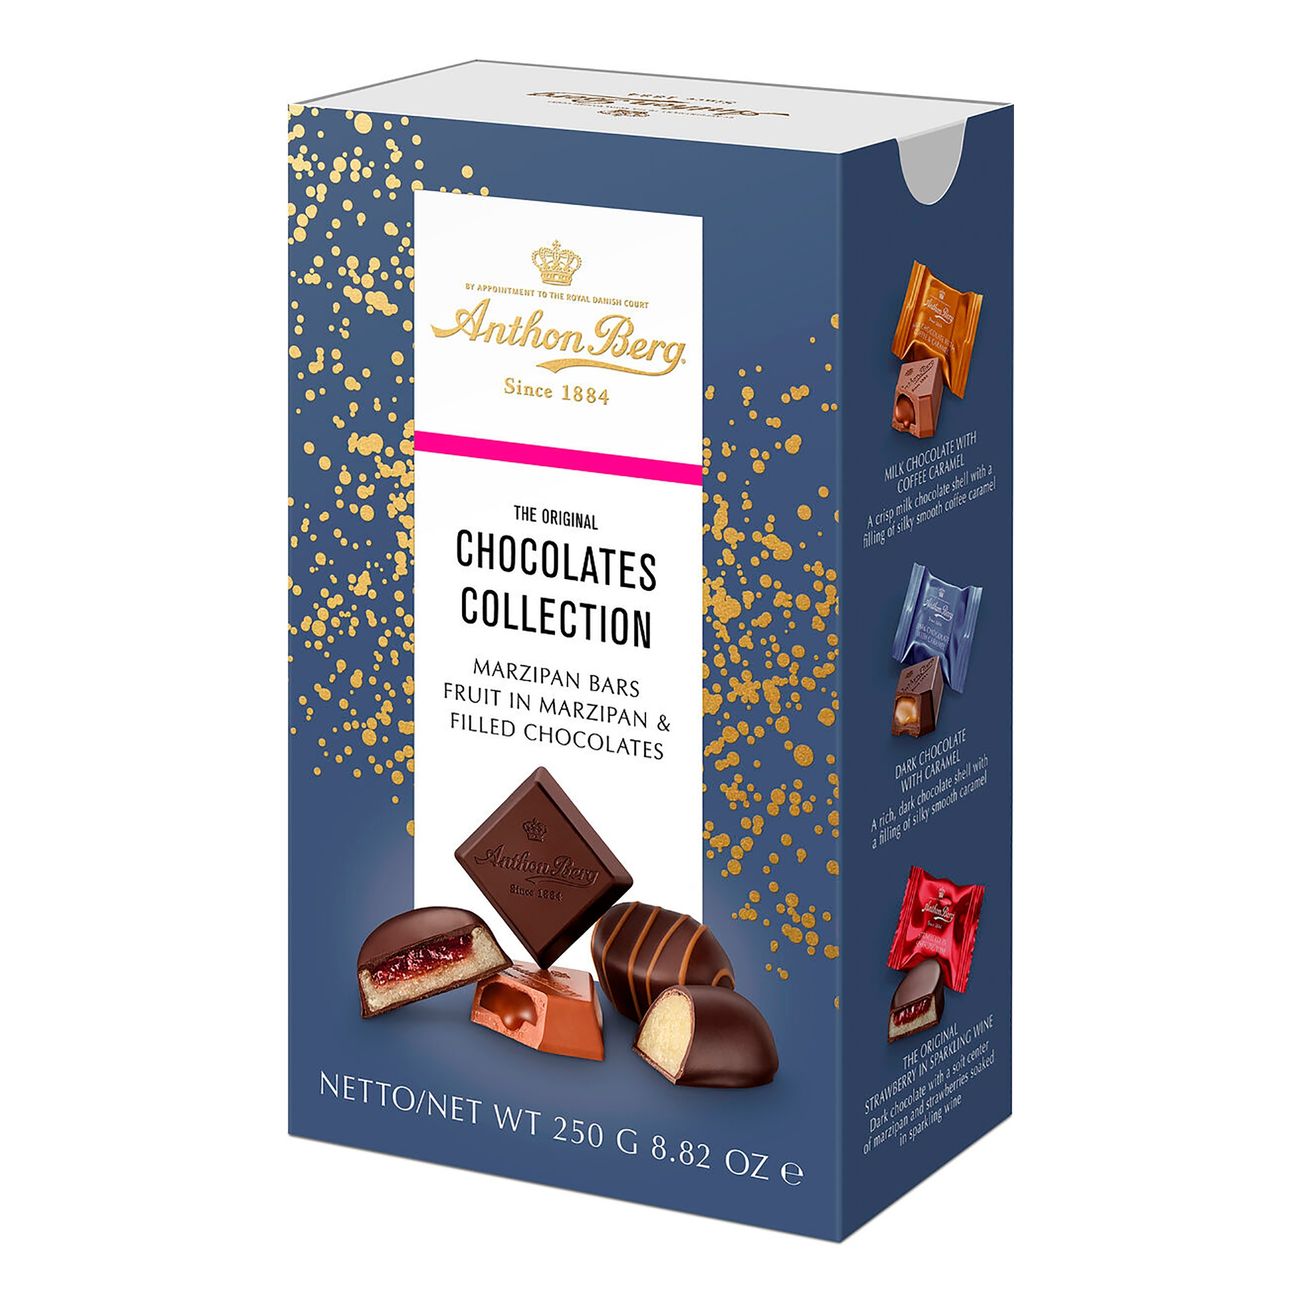 the-original-chocolates-collection-91532-1